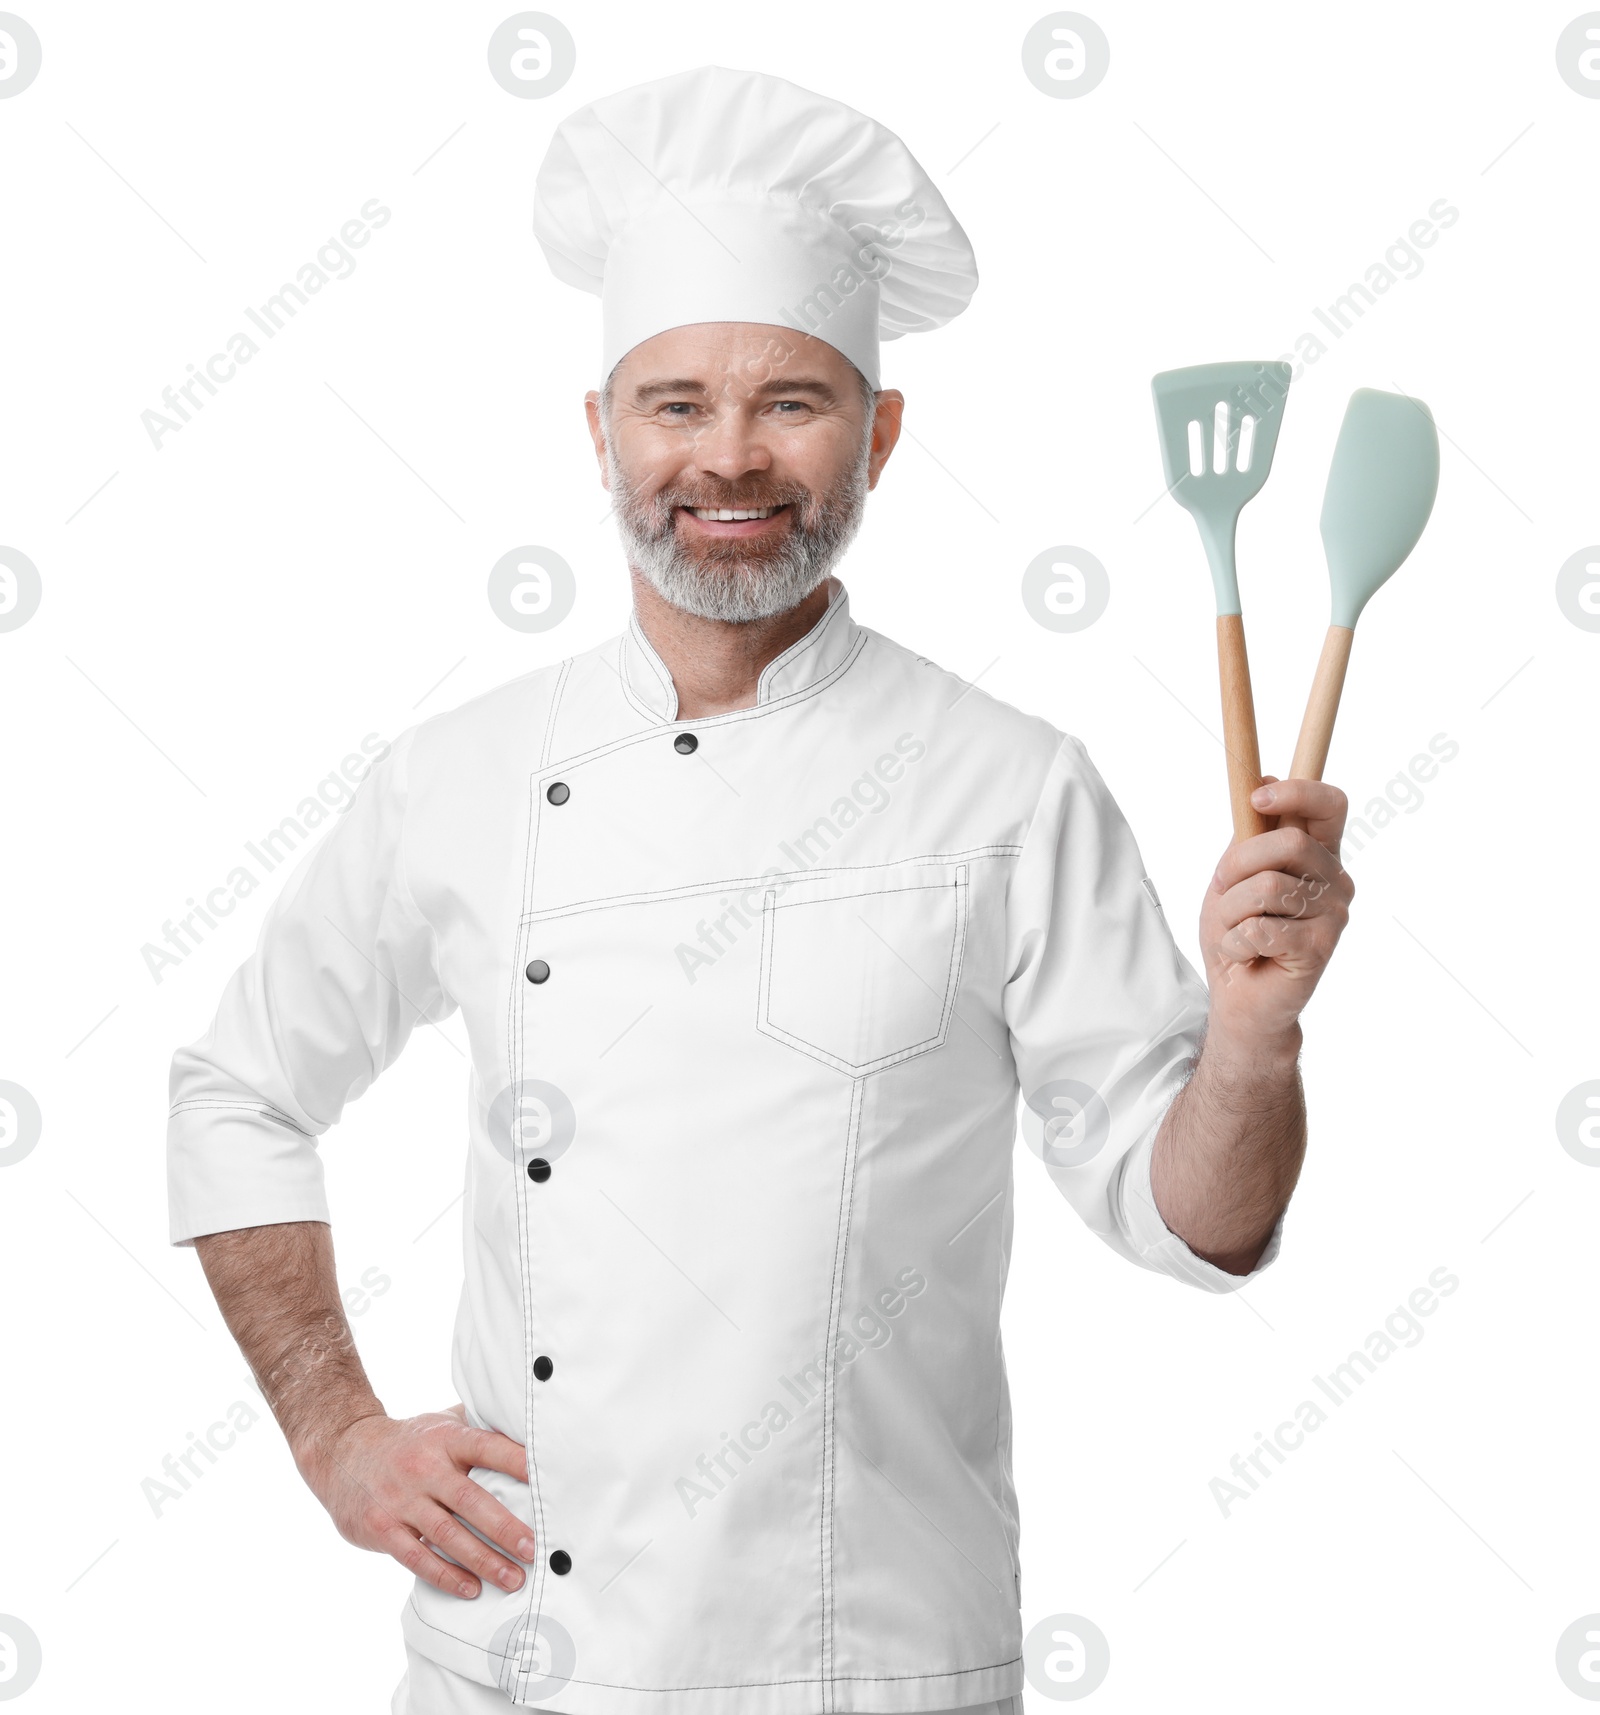 Photo of Happy chef in uniform holding kitchen utensils on white background